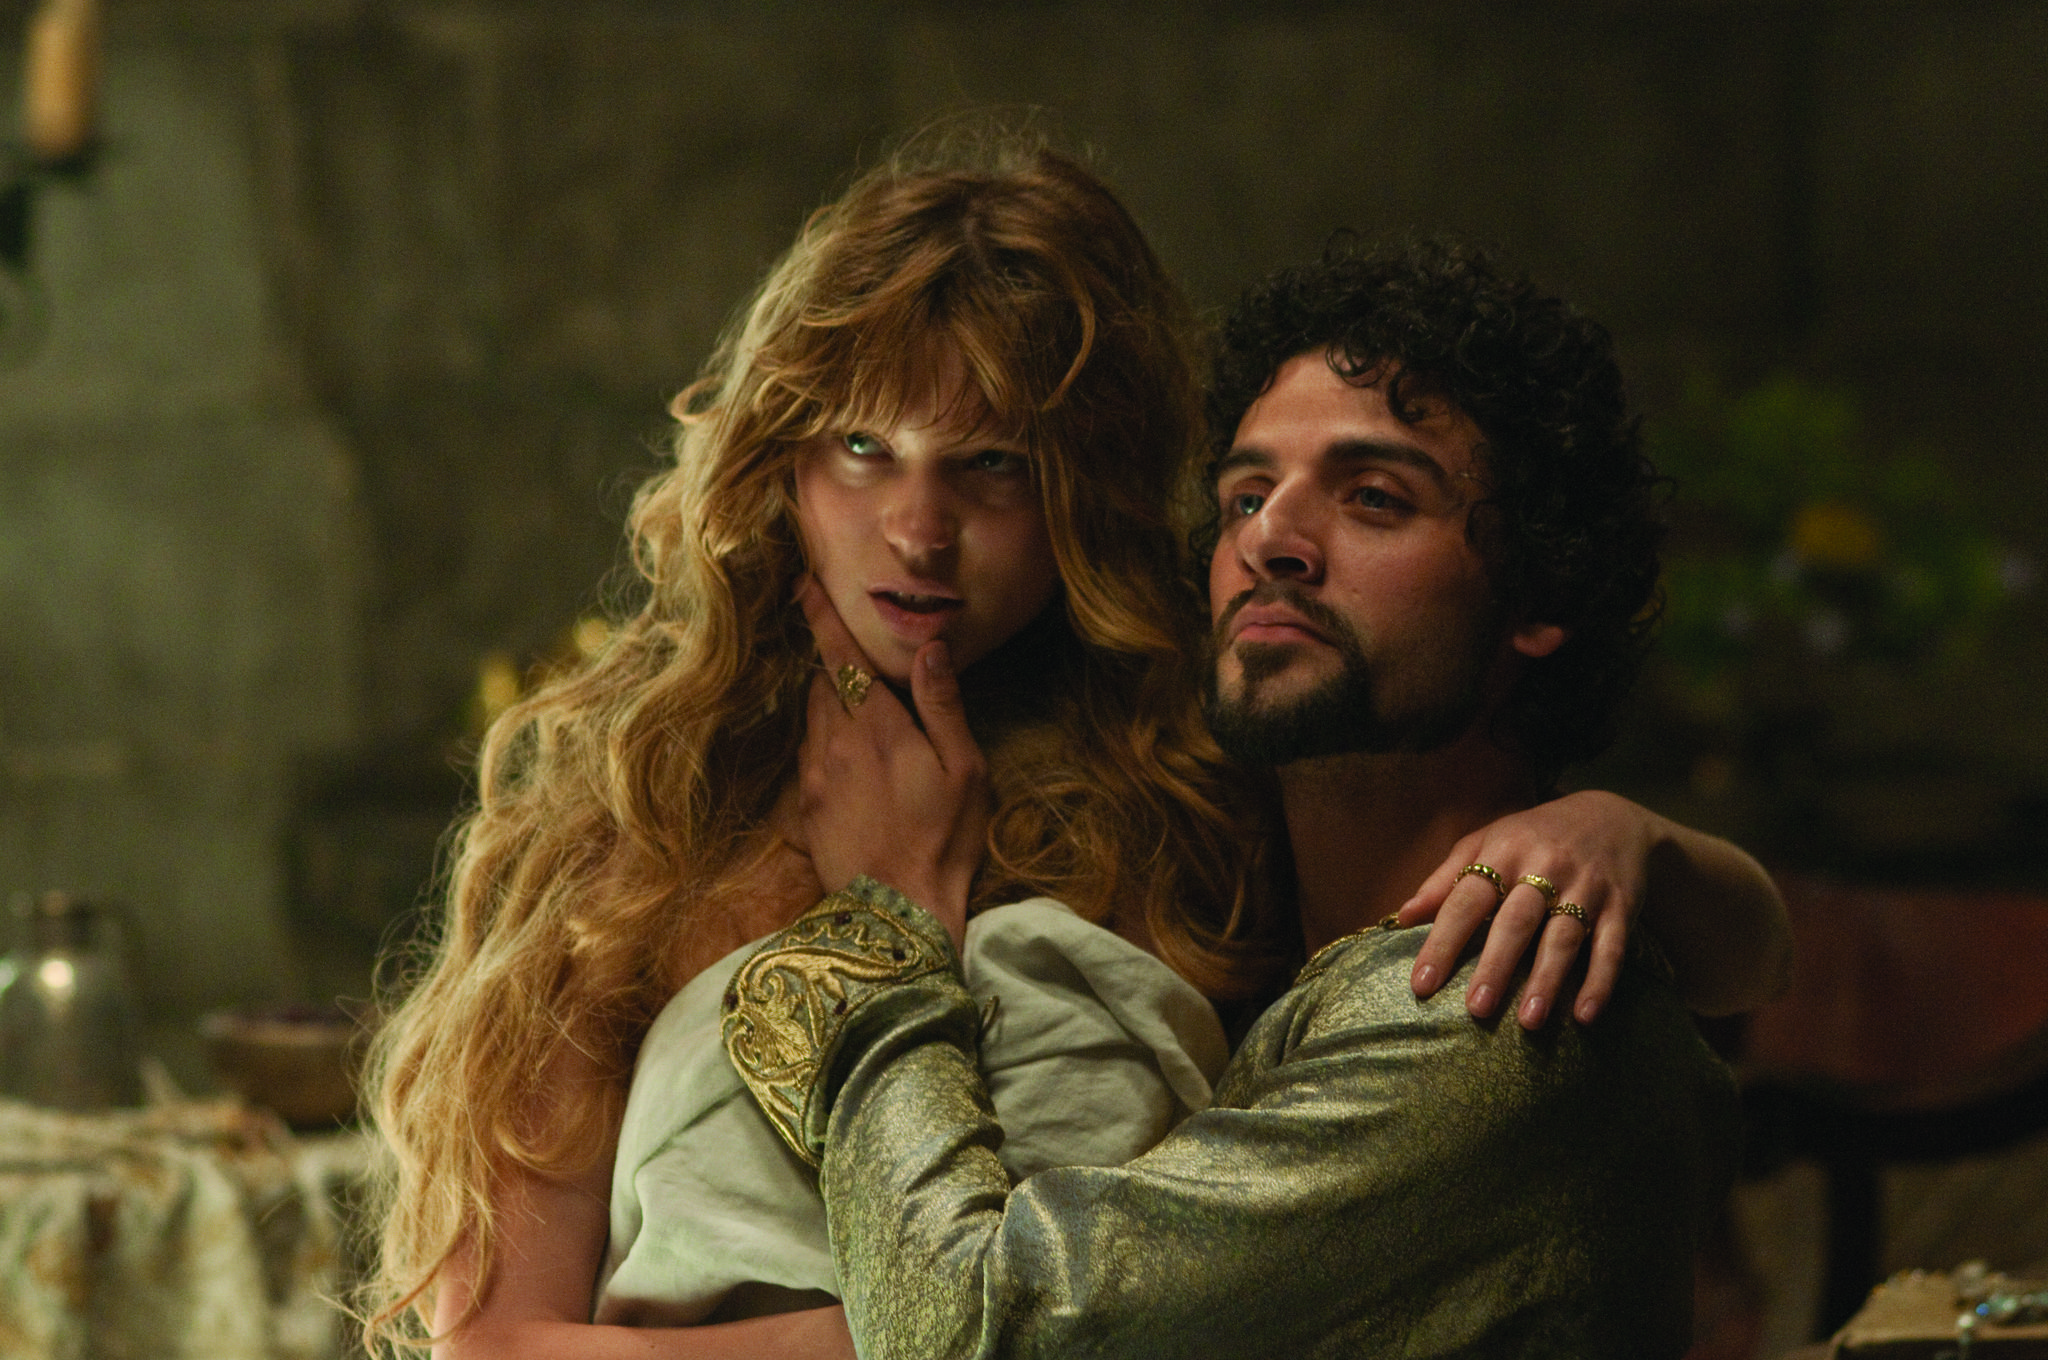 Still of Oscar Isaac and Léa Seydoux in Robinas Hudas (2010)